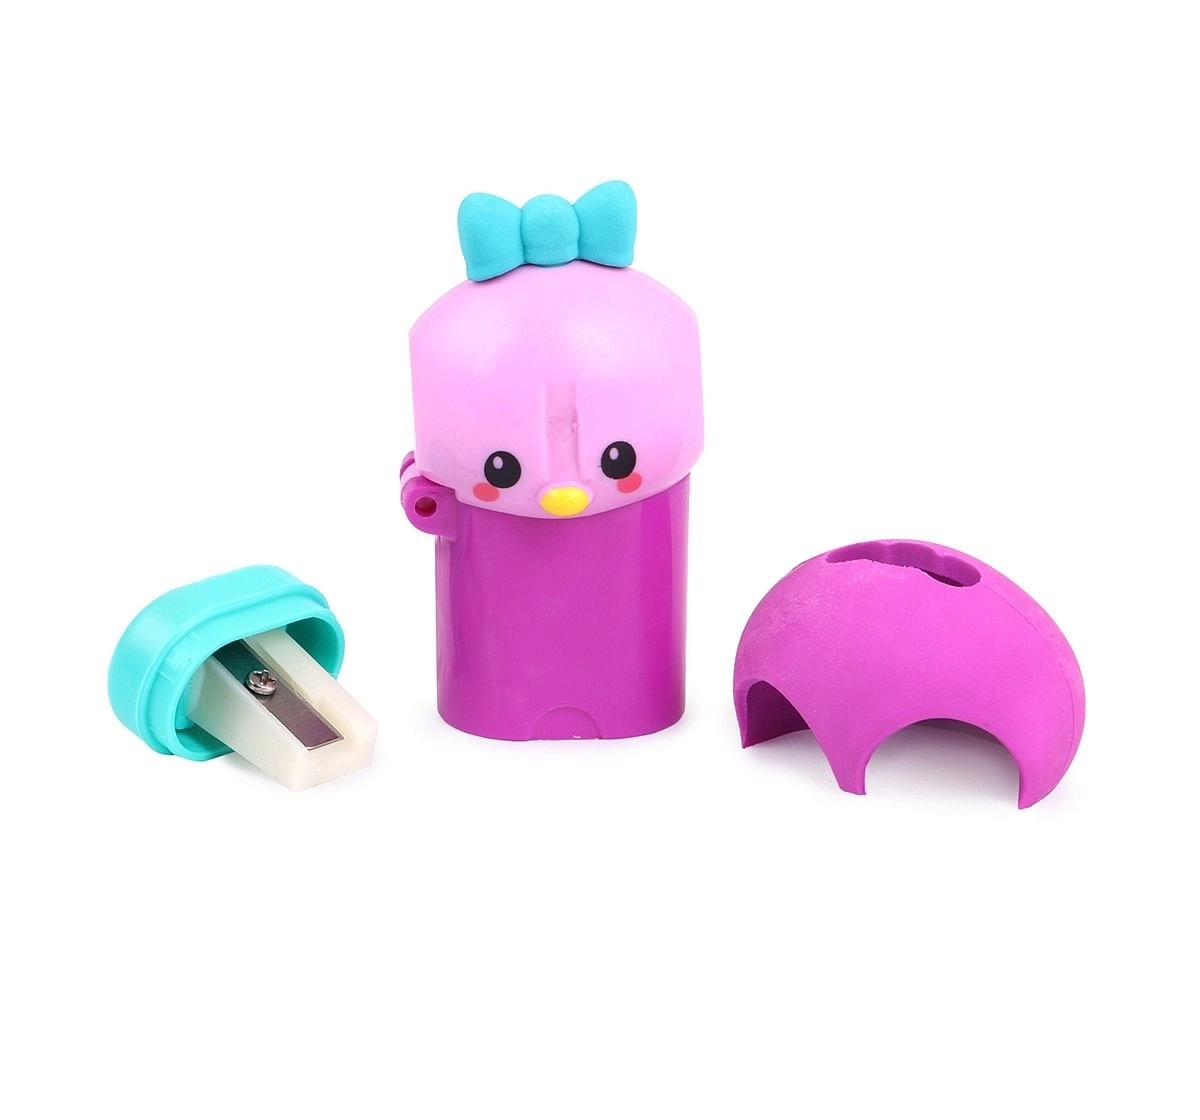 Hamster London Scented Sharpener & Eraser Cuticon for Kids age 3Y+